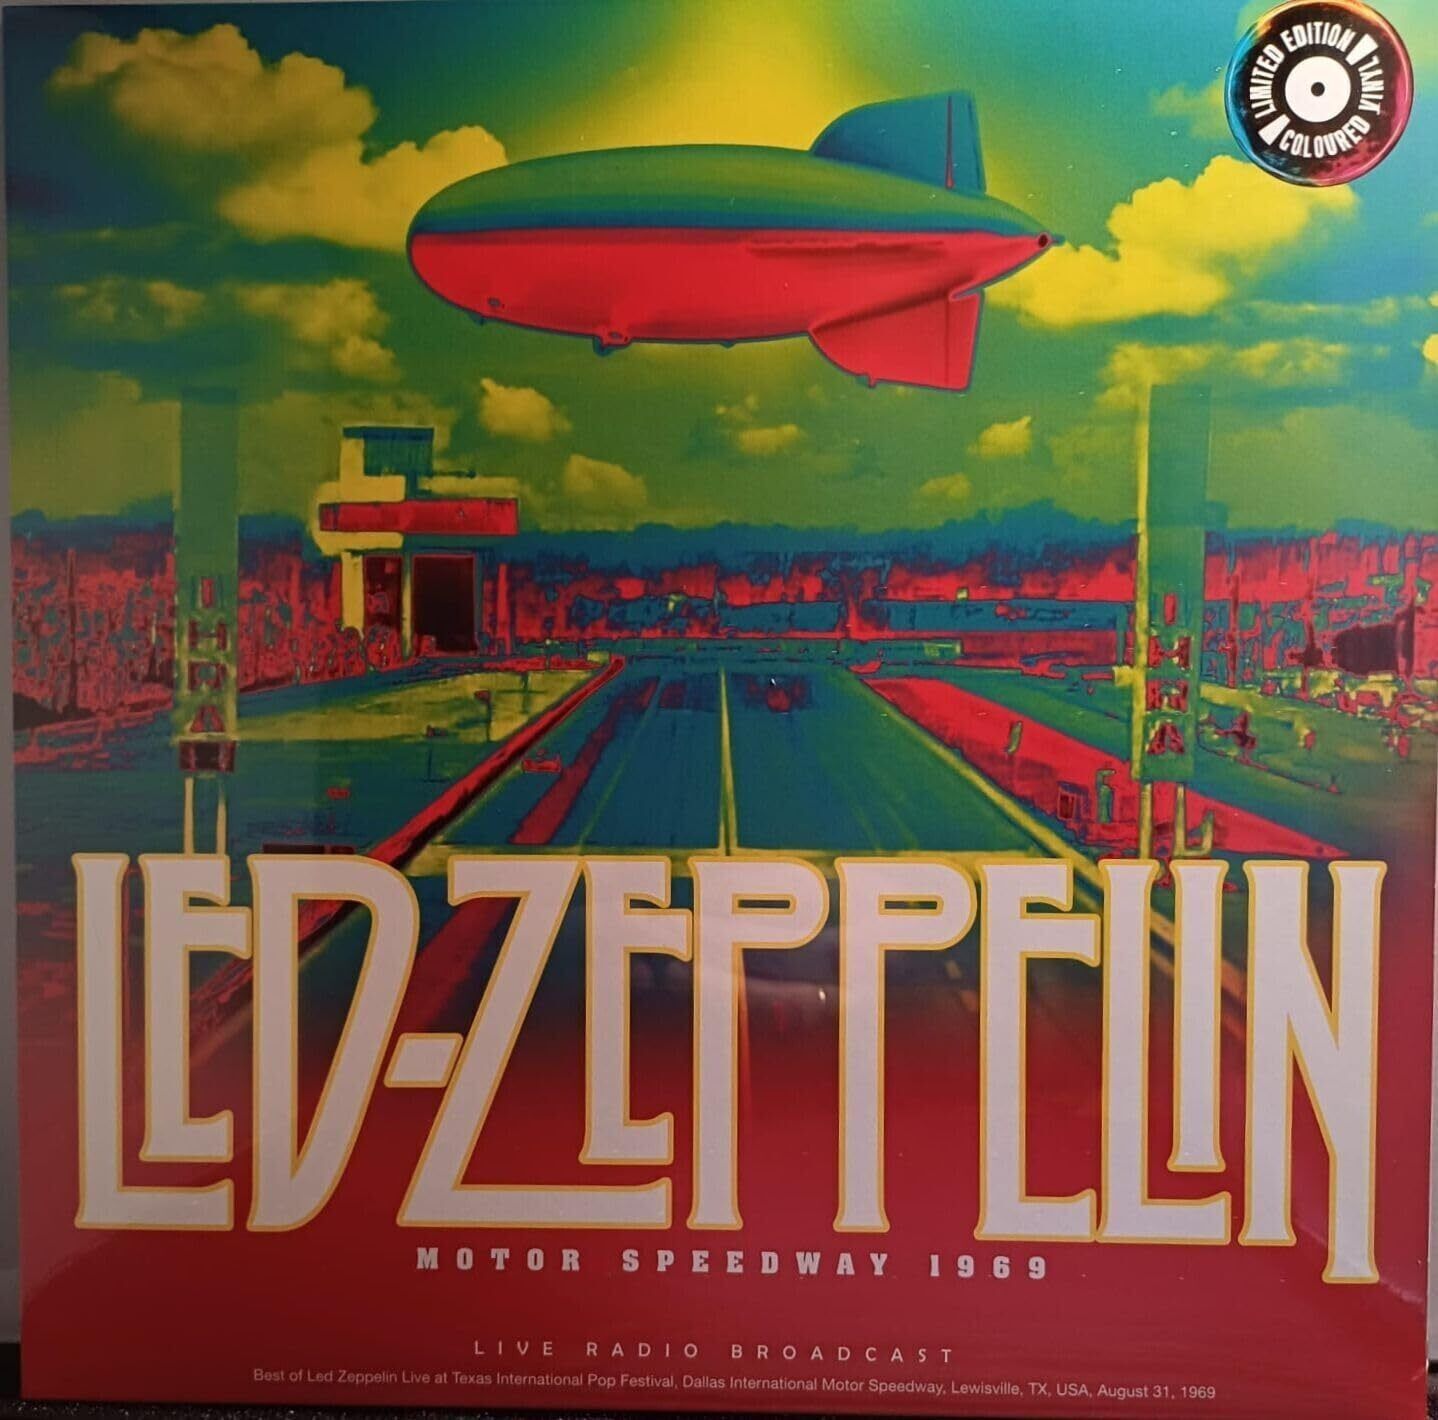 Led Zeppelin Motor Speedway 1969-blue transparent Sleeve (Vinyl)